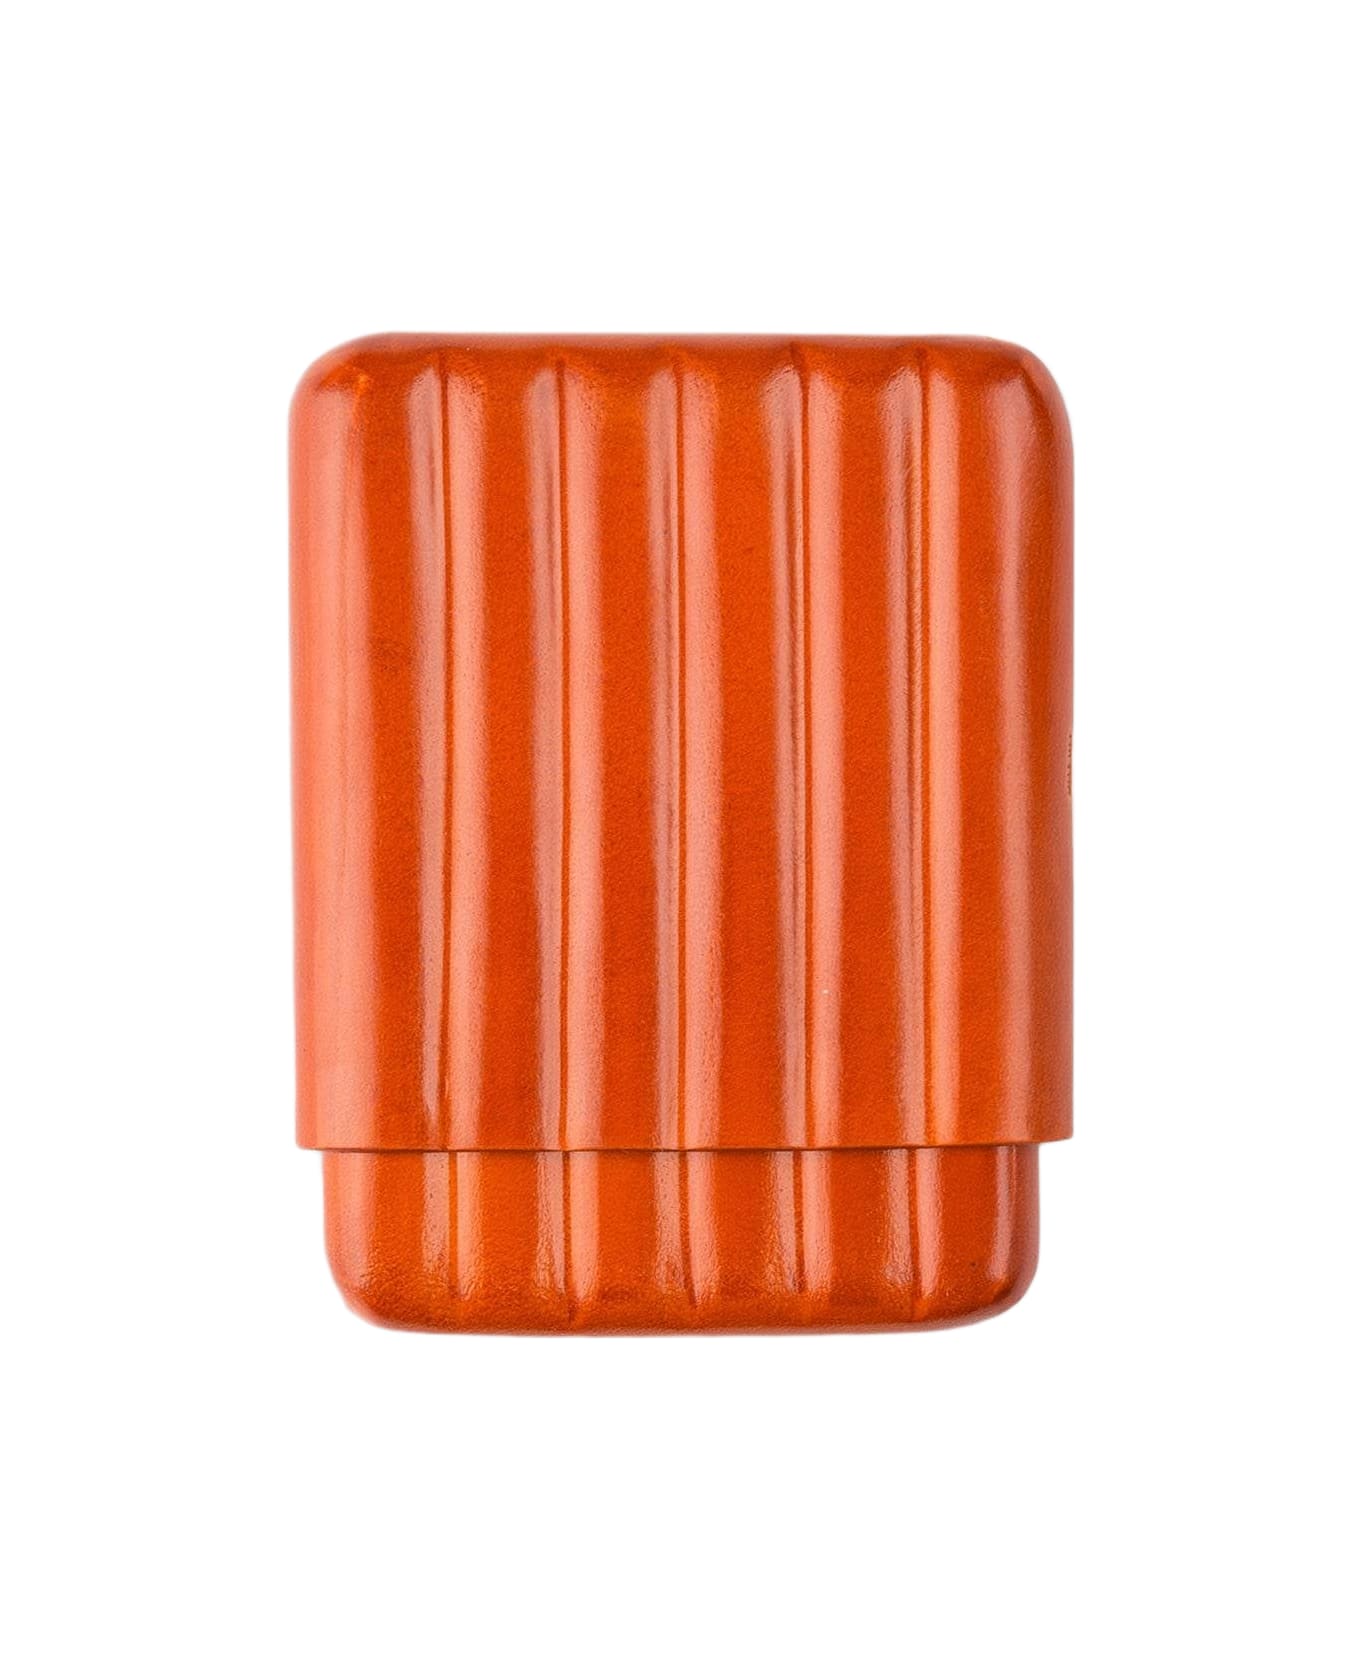 Larusmiani Cigarette Case Cover  - Orange タバコアクセサリー